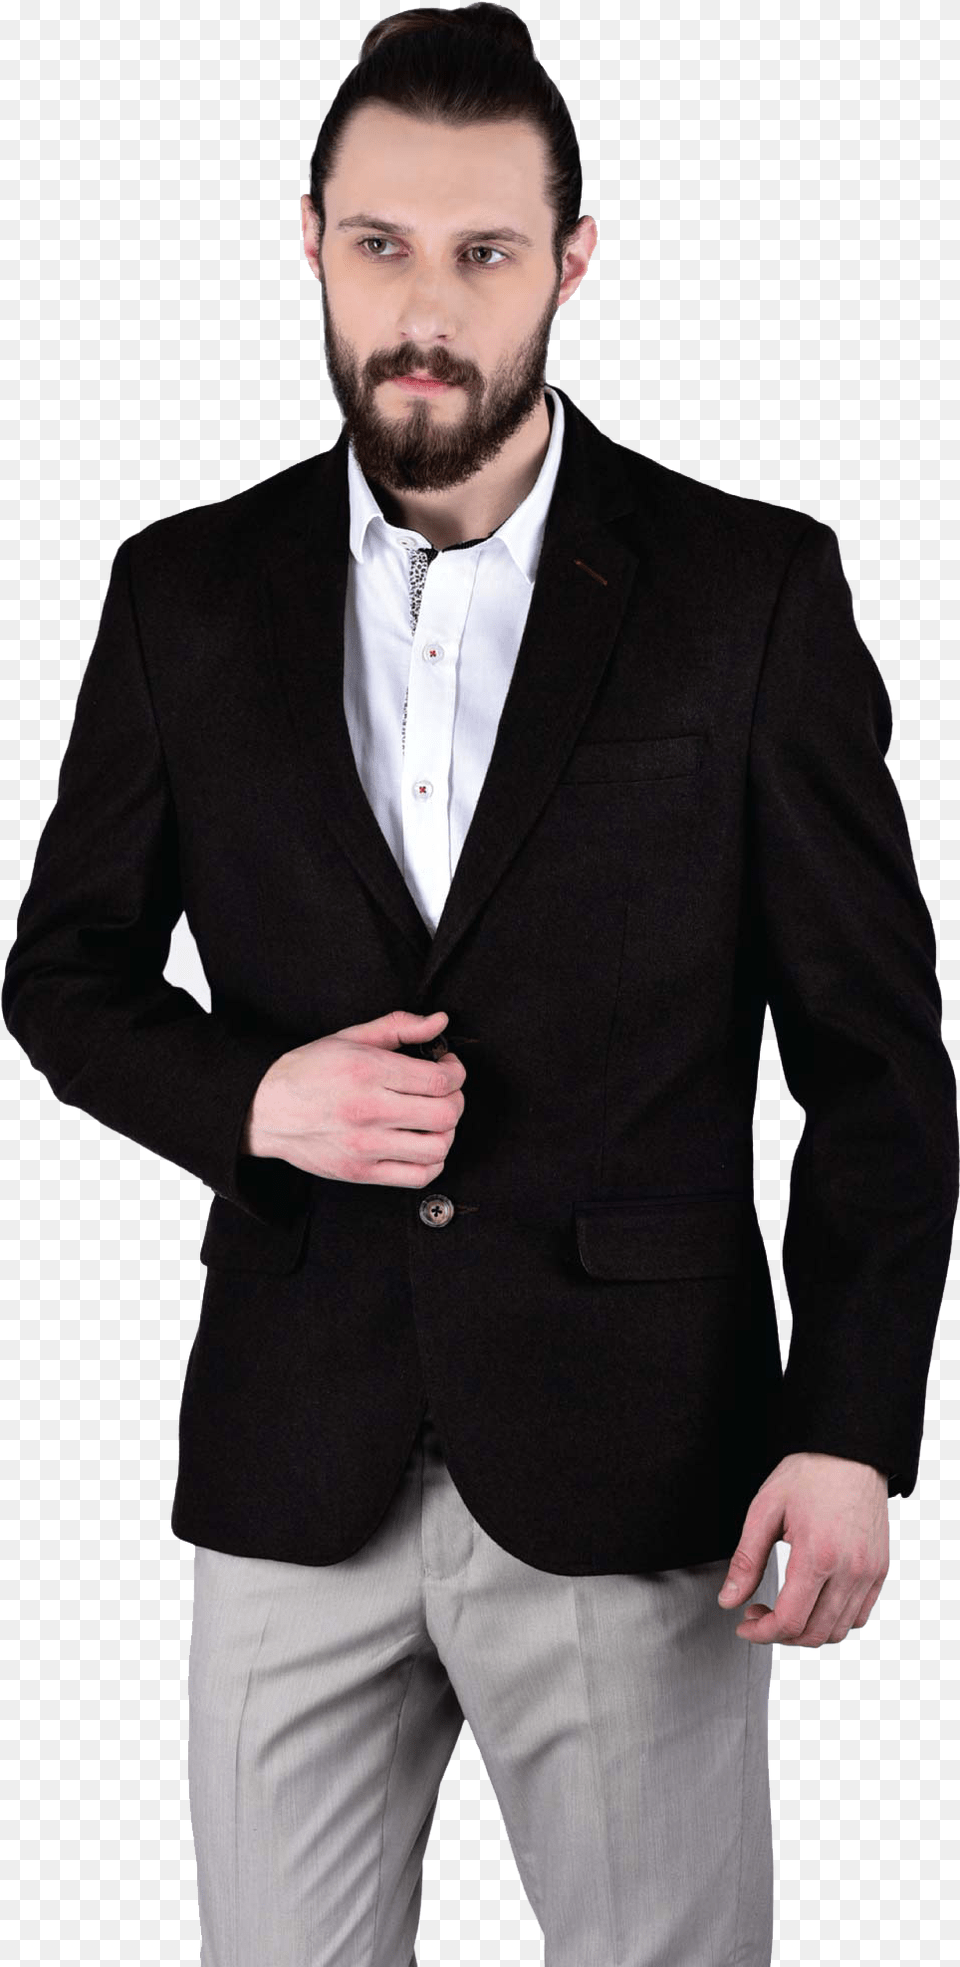 Coat Black Background Saco O Smoking, Blazer, Suit, Jacket, Tuxedo Free Png Download